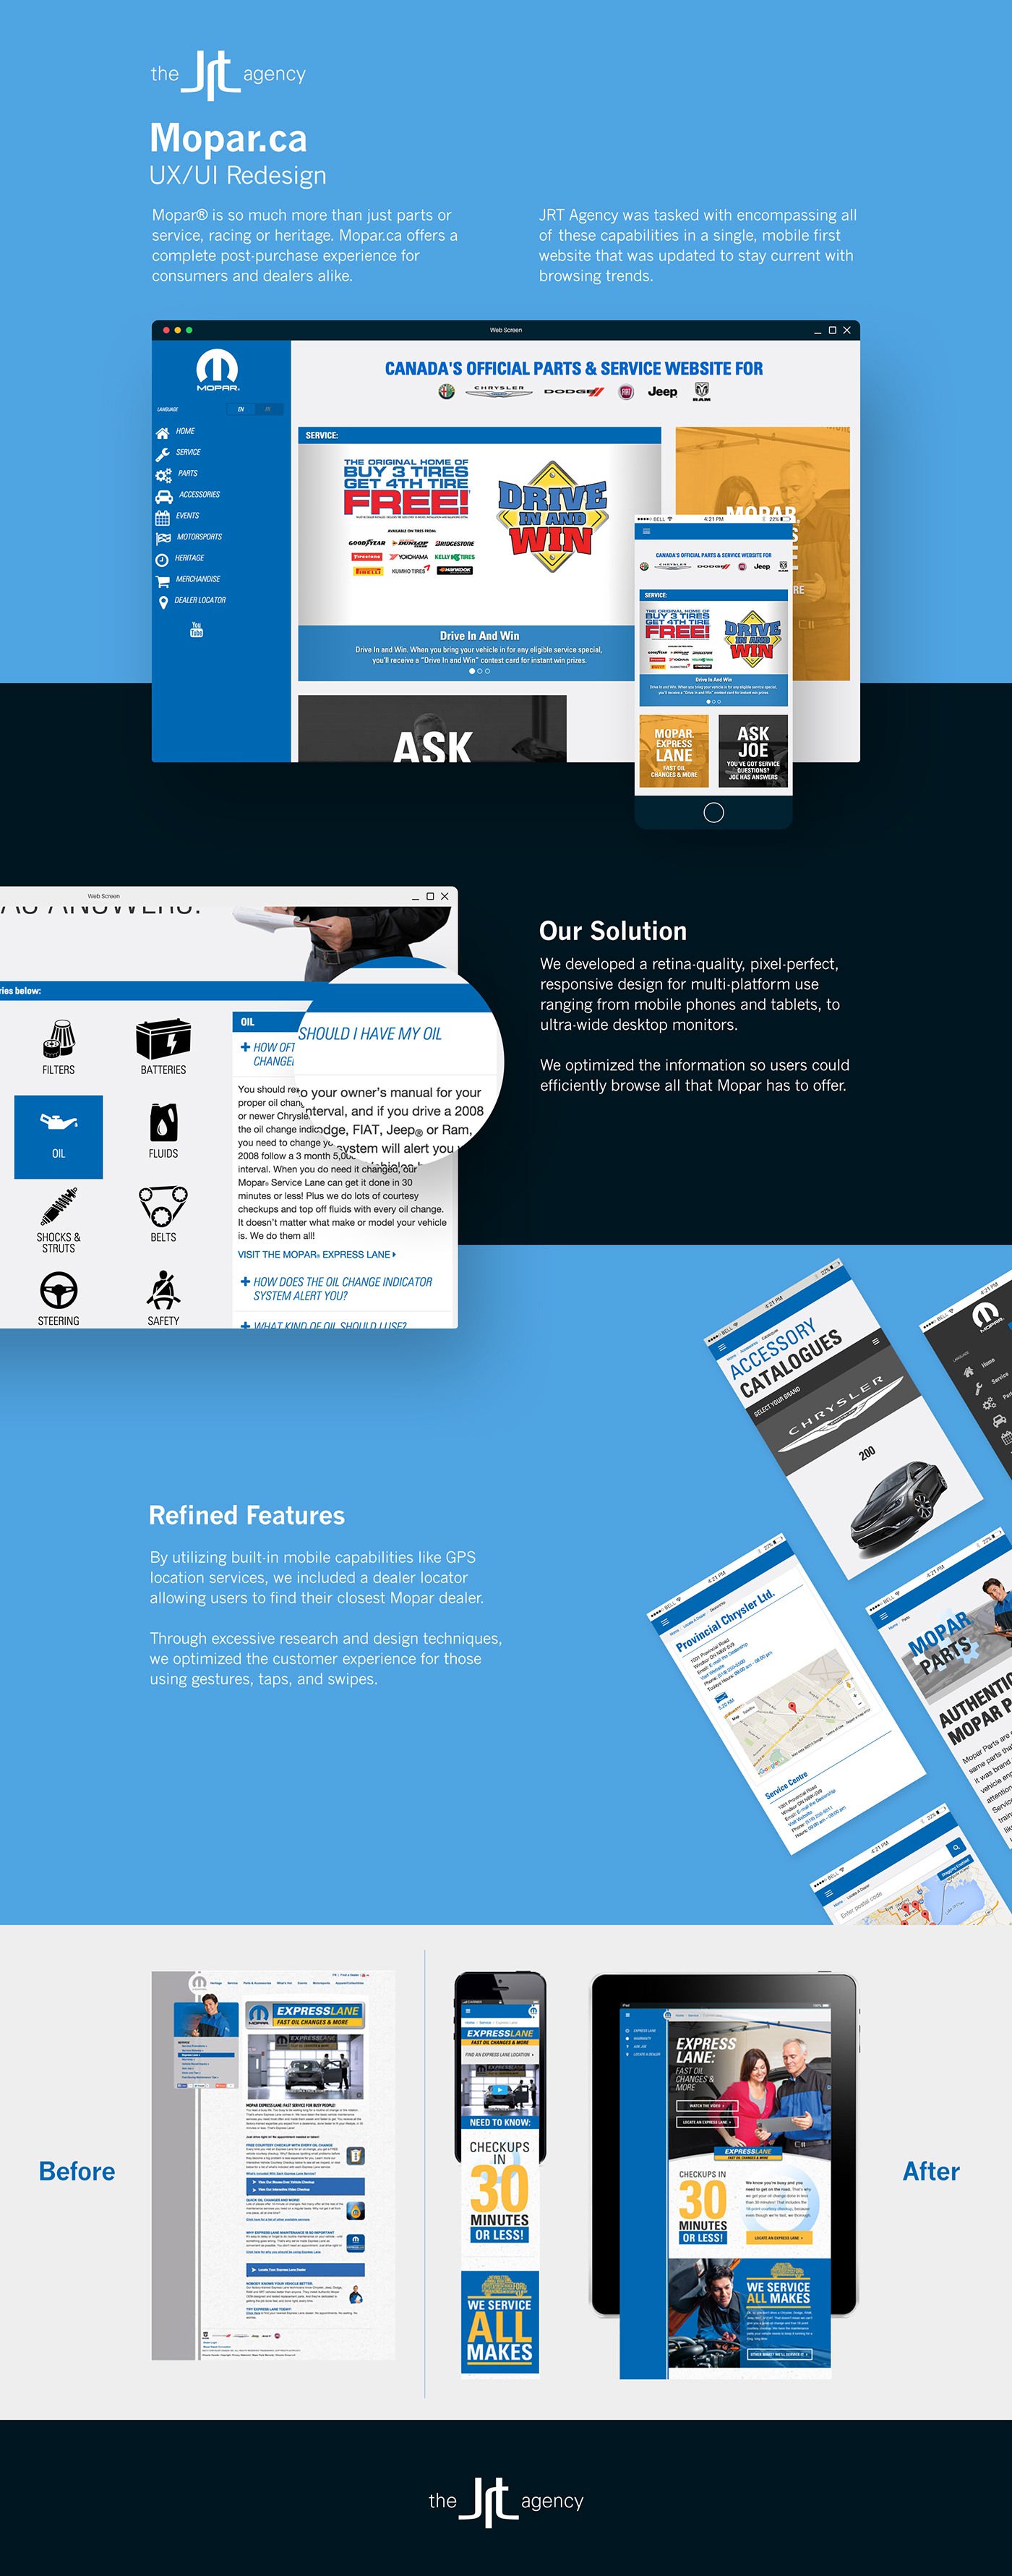 UI ux Website design interactive mopar Auto parts franchise fca graphicdesign graphic art Interface Experience